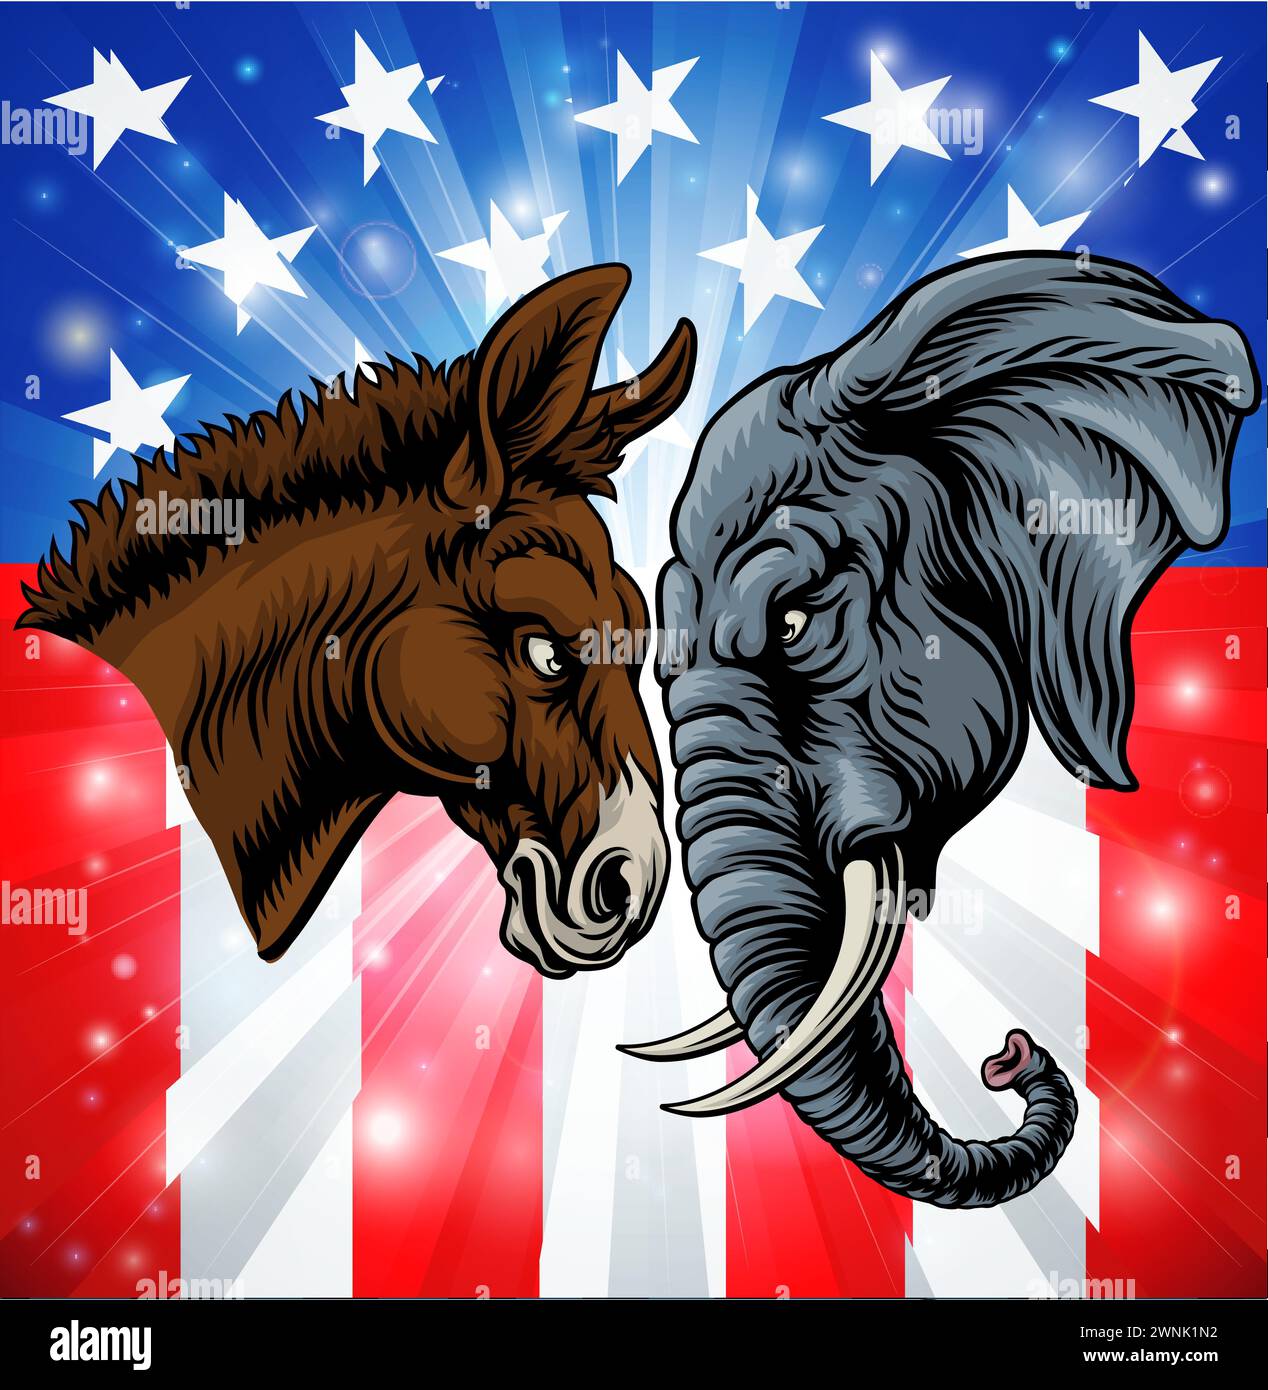 Republican Democrat Elephant Donkey Party Politics Stock Vector